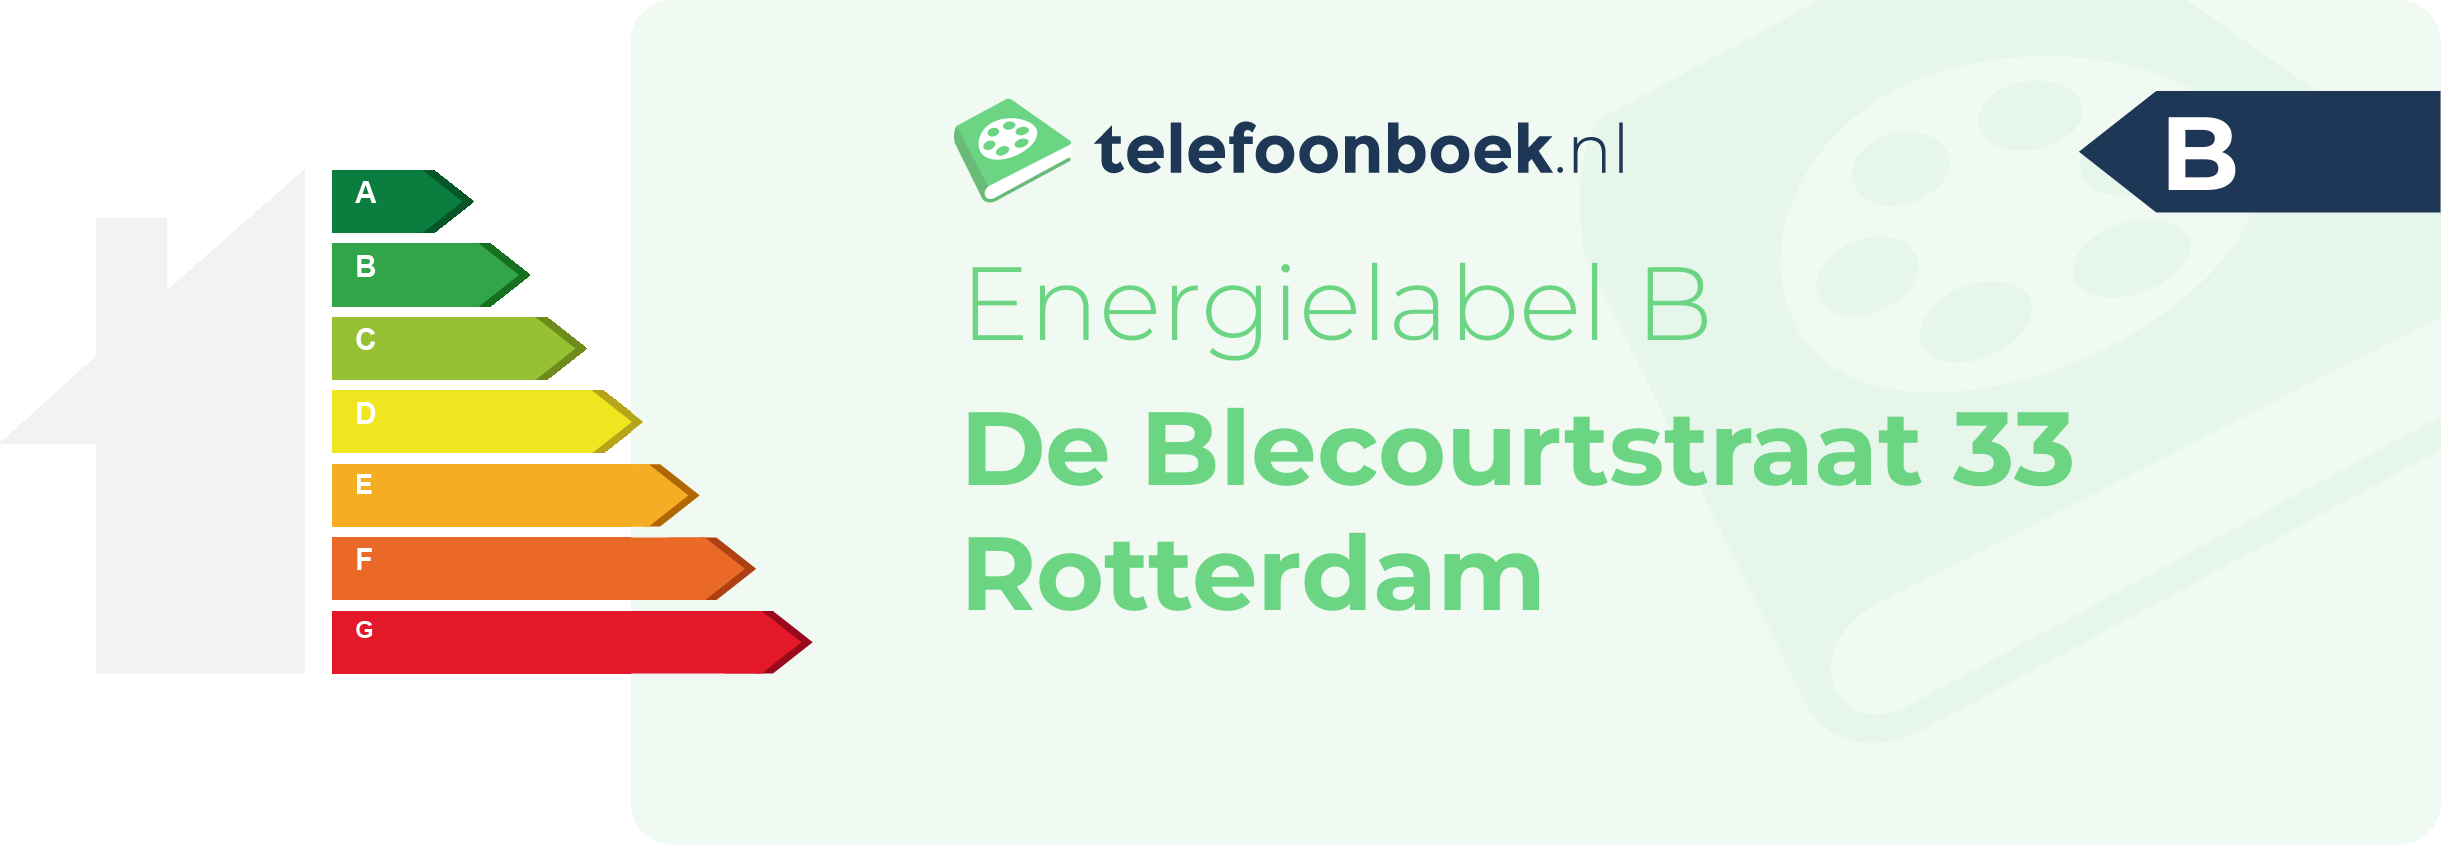 Energielabel De Blecourtstraat 33 Rotterdam